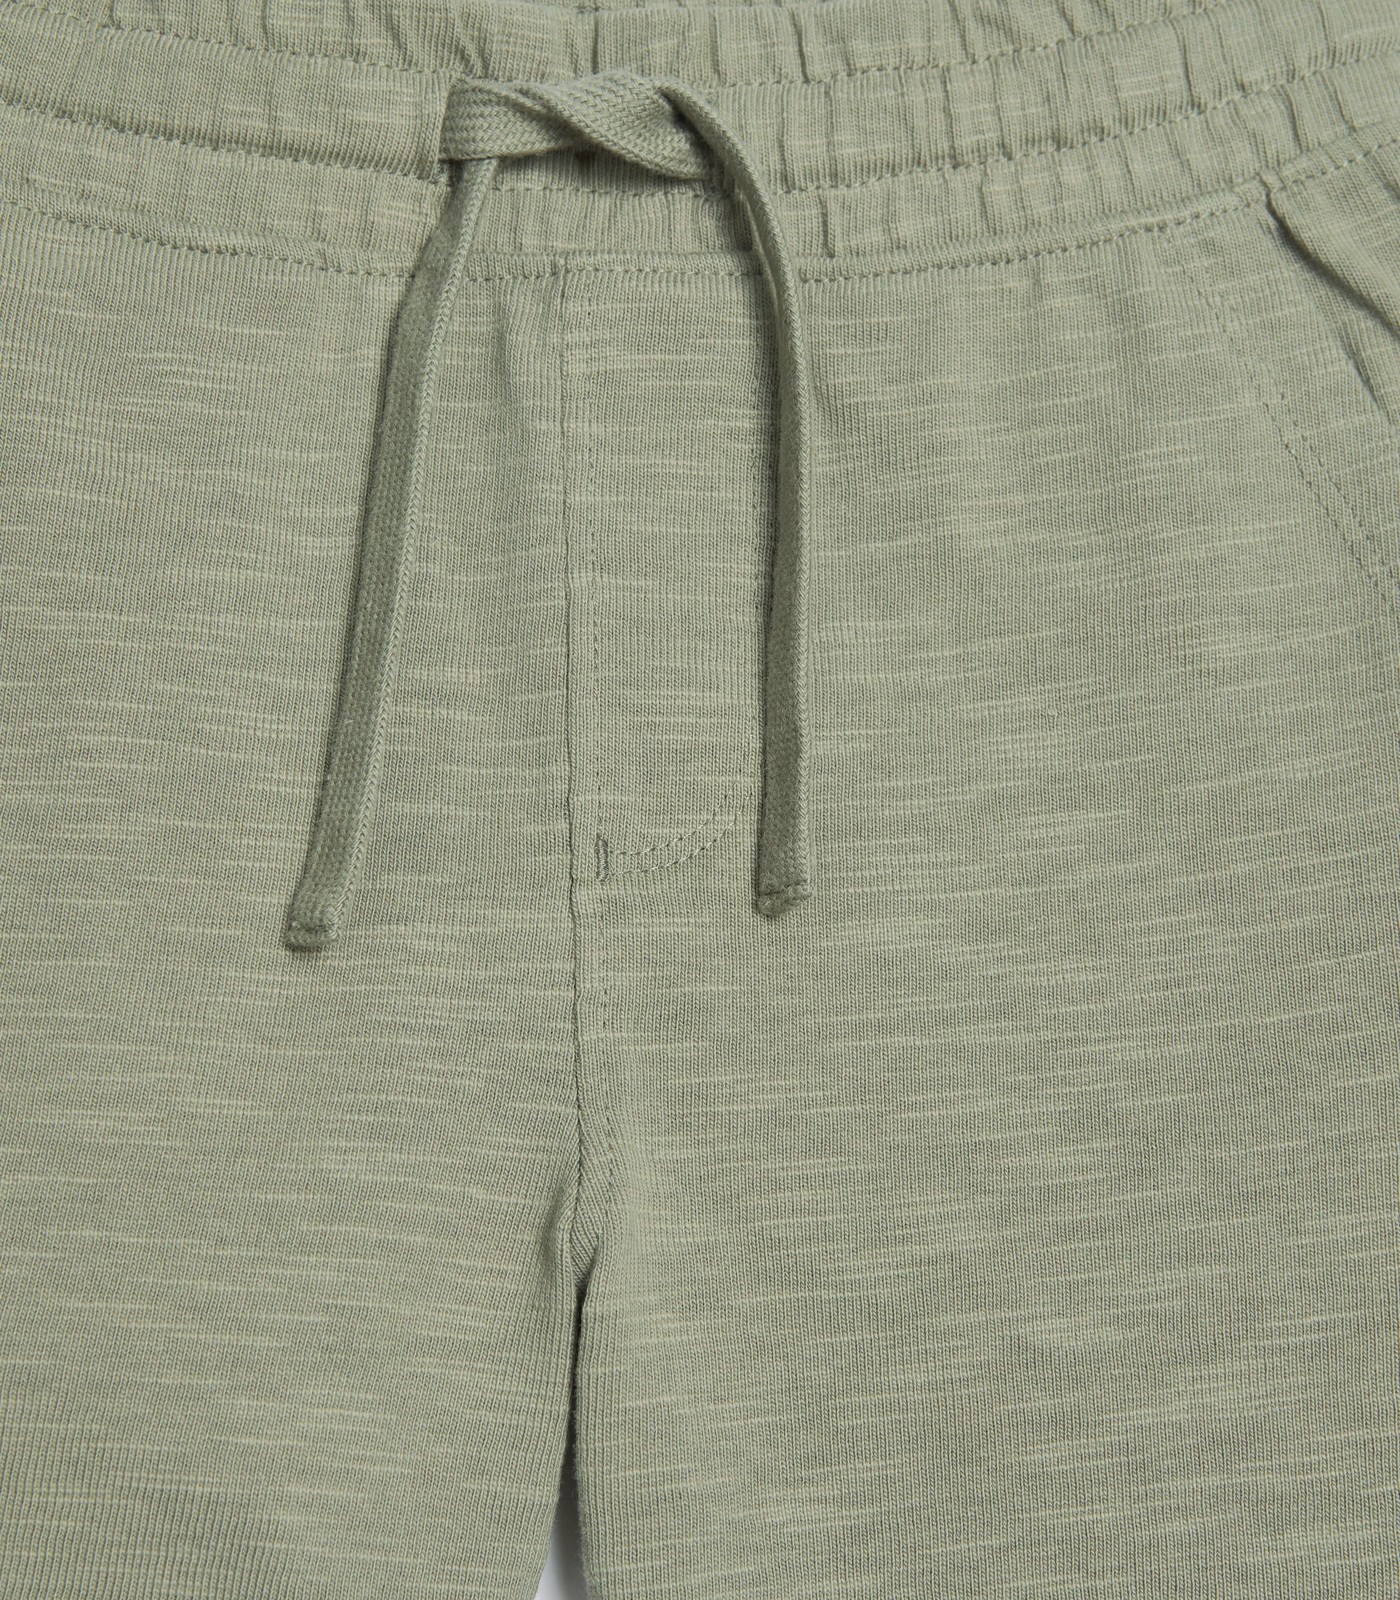 Sweat Shorts | Target Australia